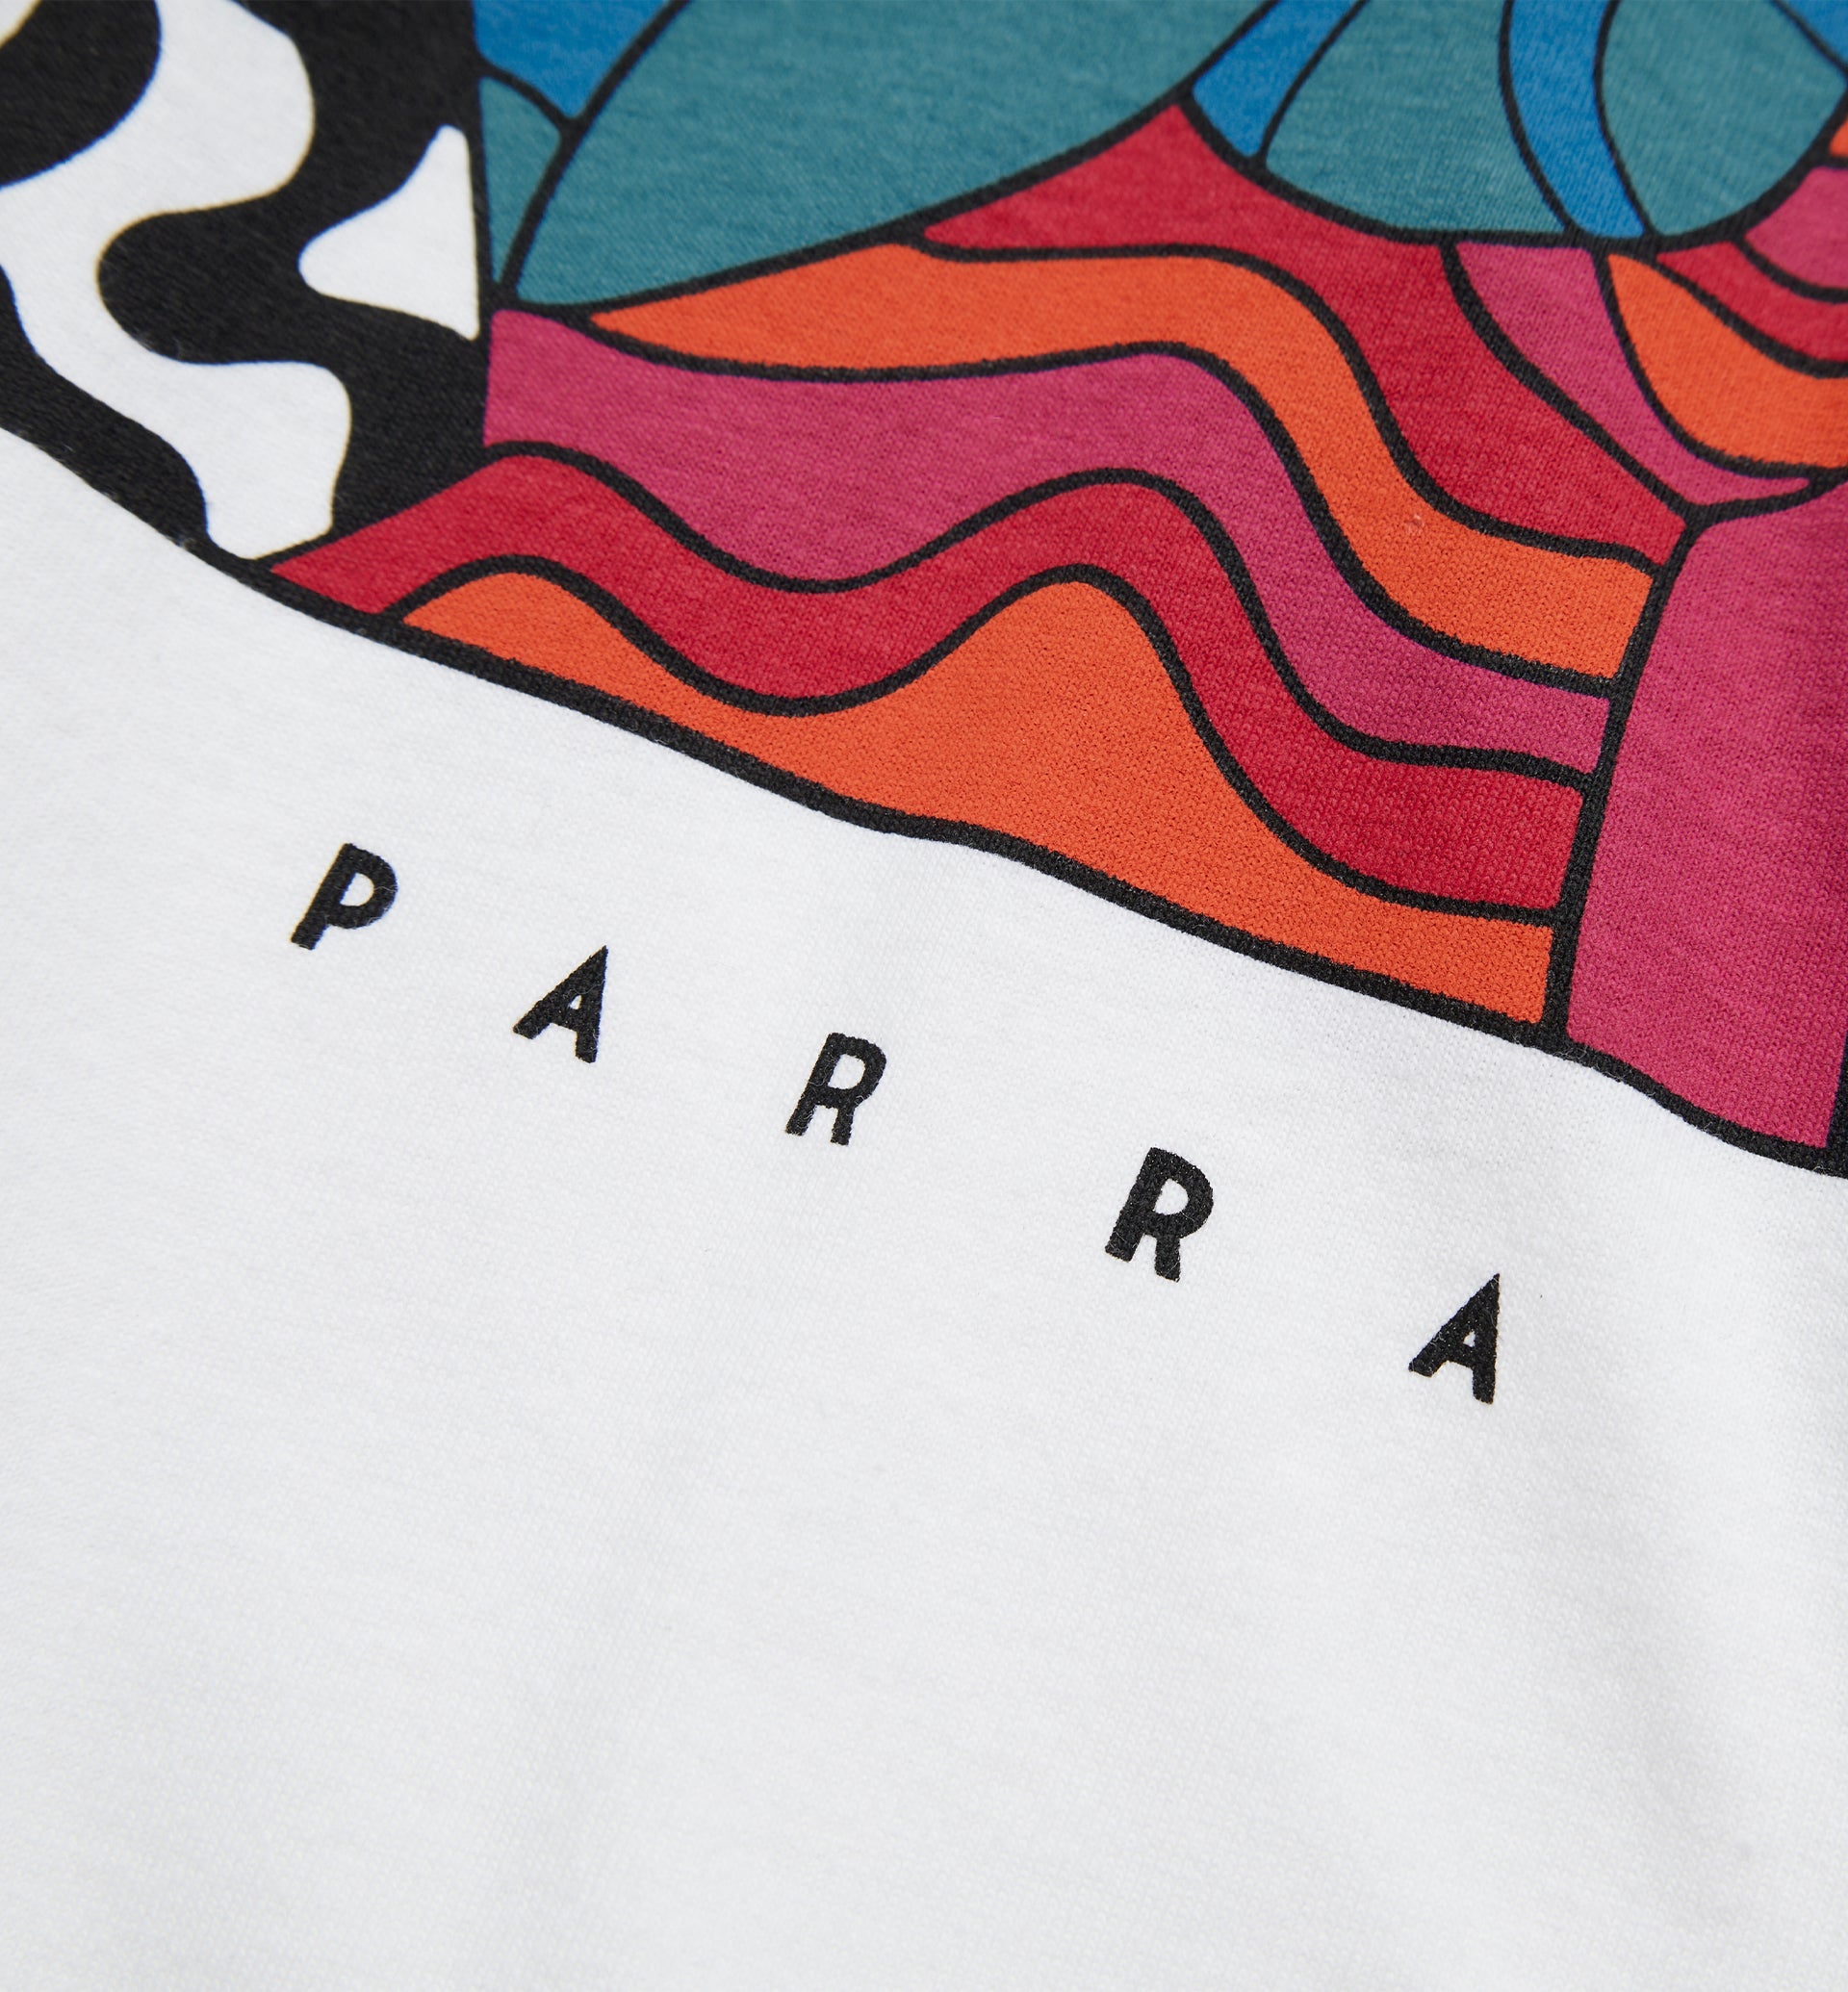 Parra - the farmhouse t-shirt